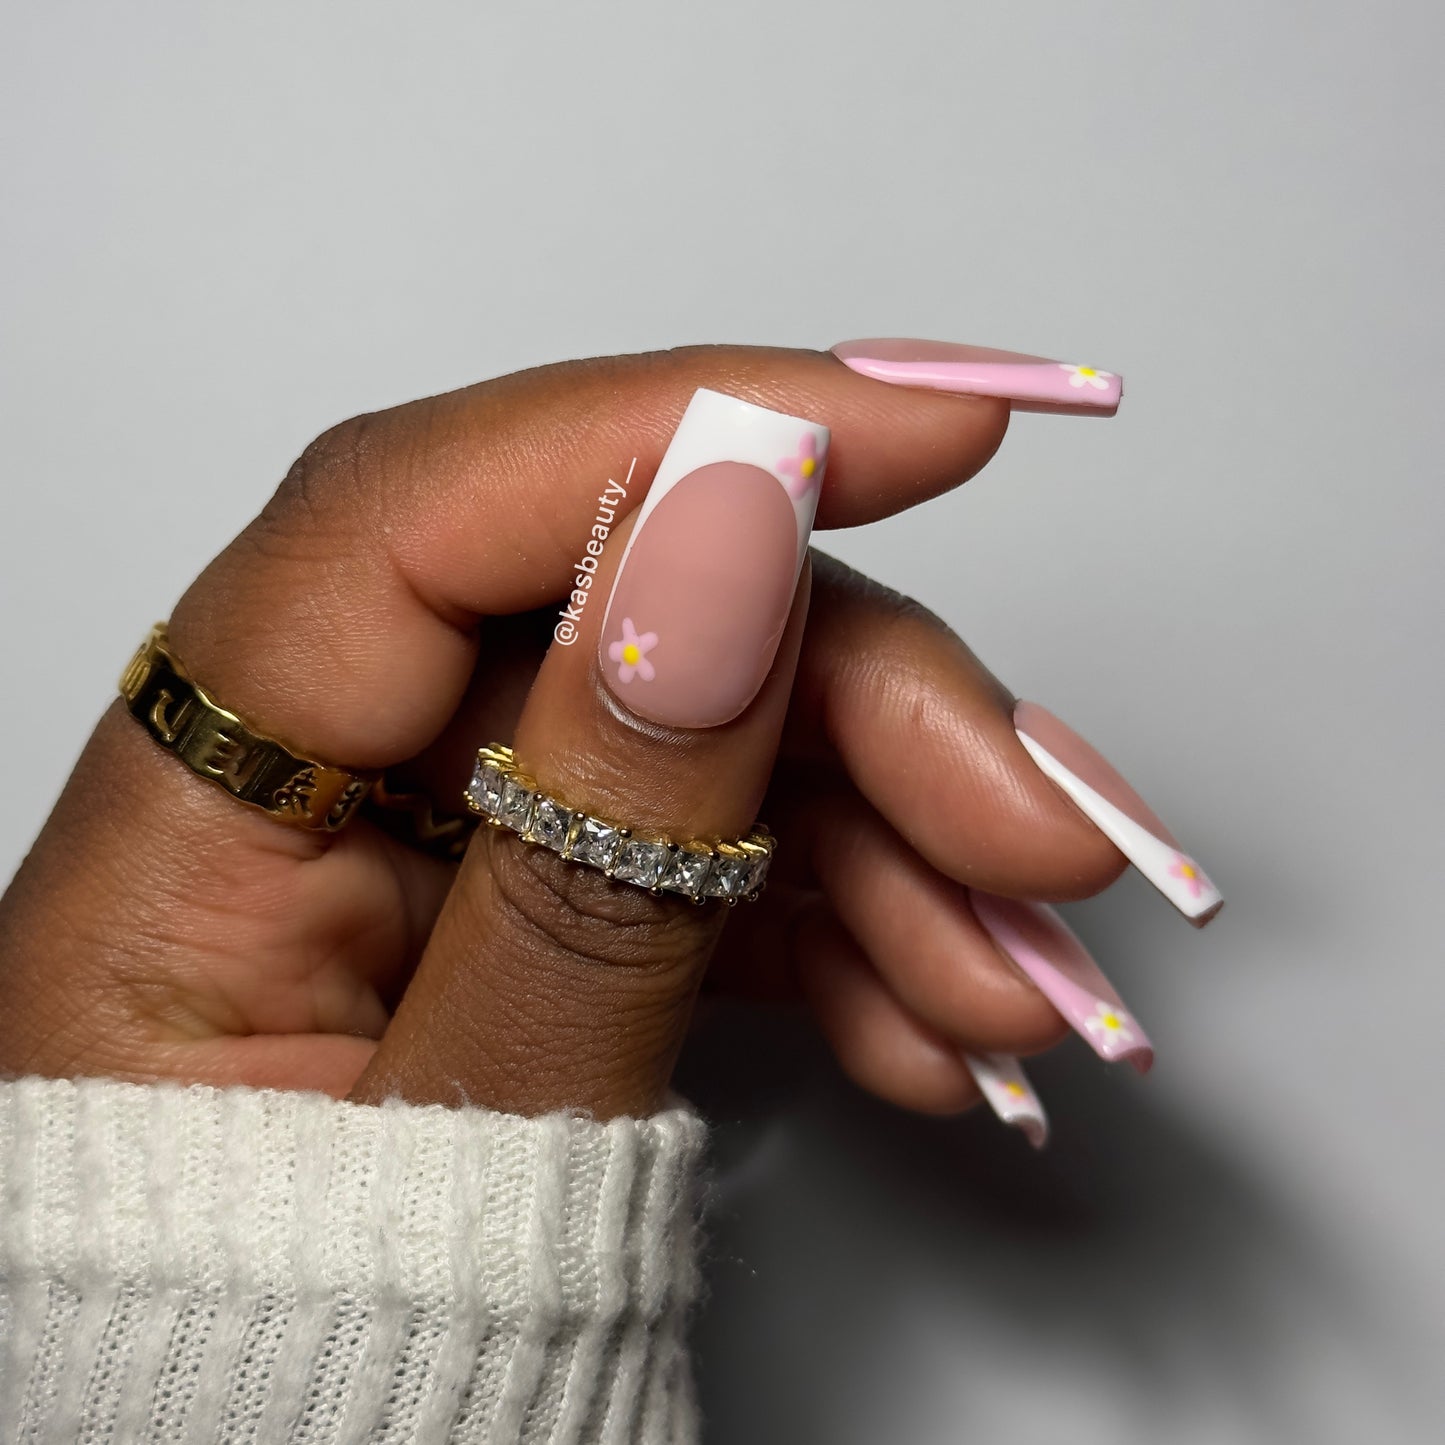 Zara Press On Nails